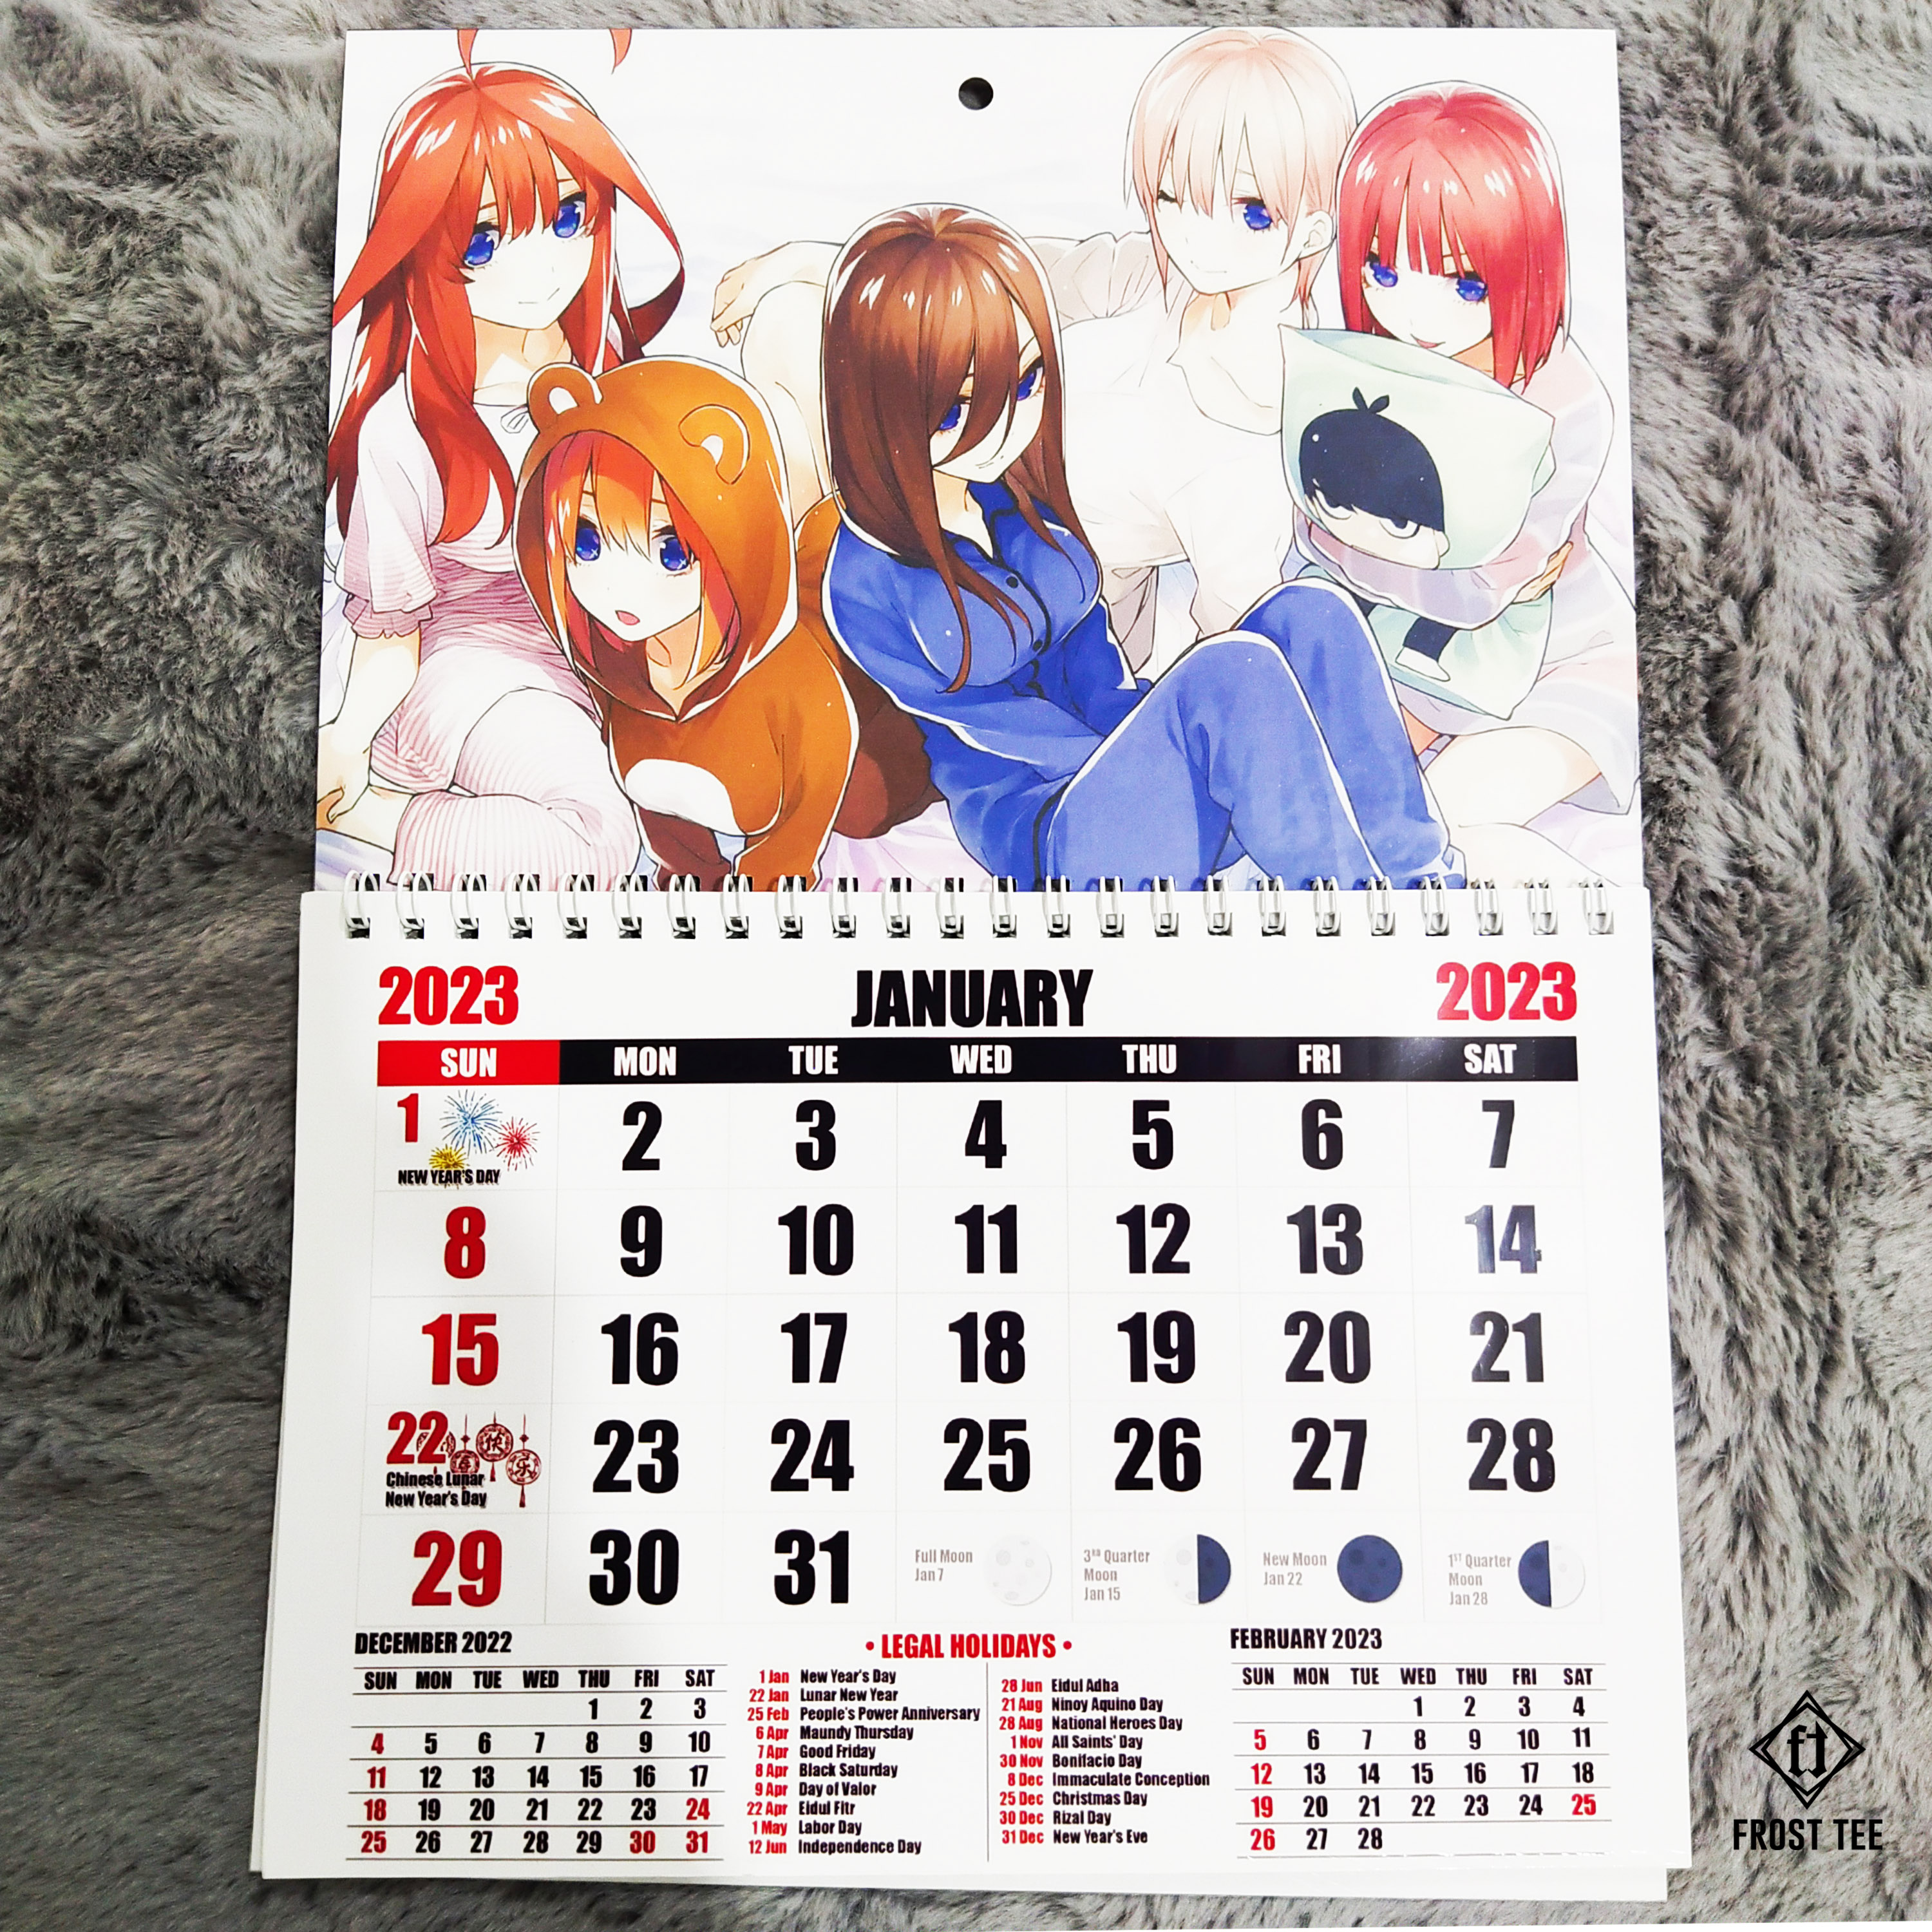 Free Downloadable Sabikui Bisco Anime Calendar 2023  All About Anime and  Manga